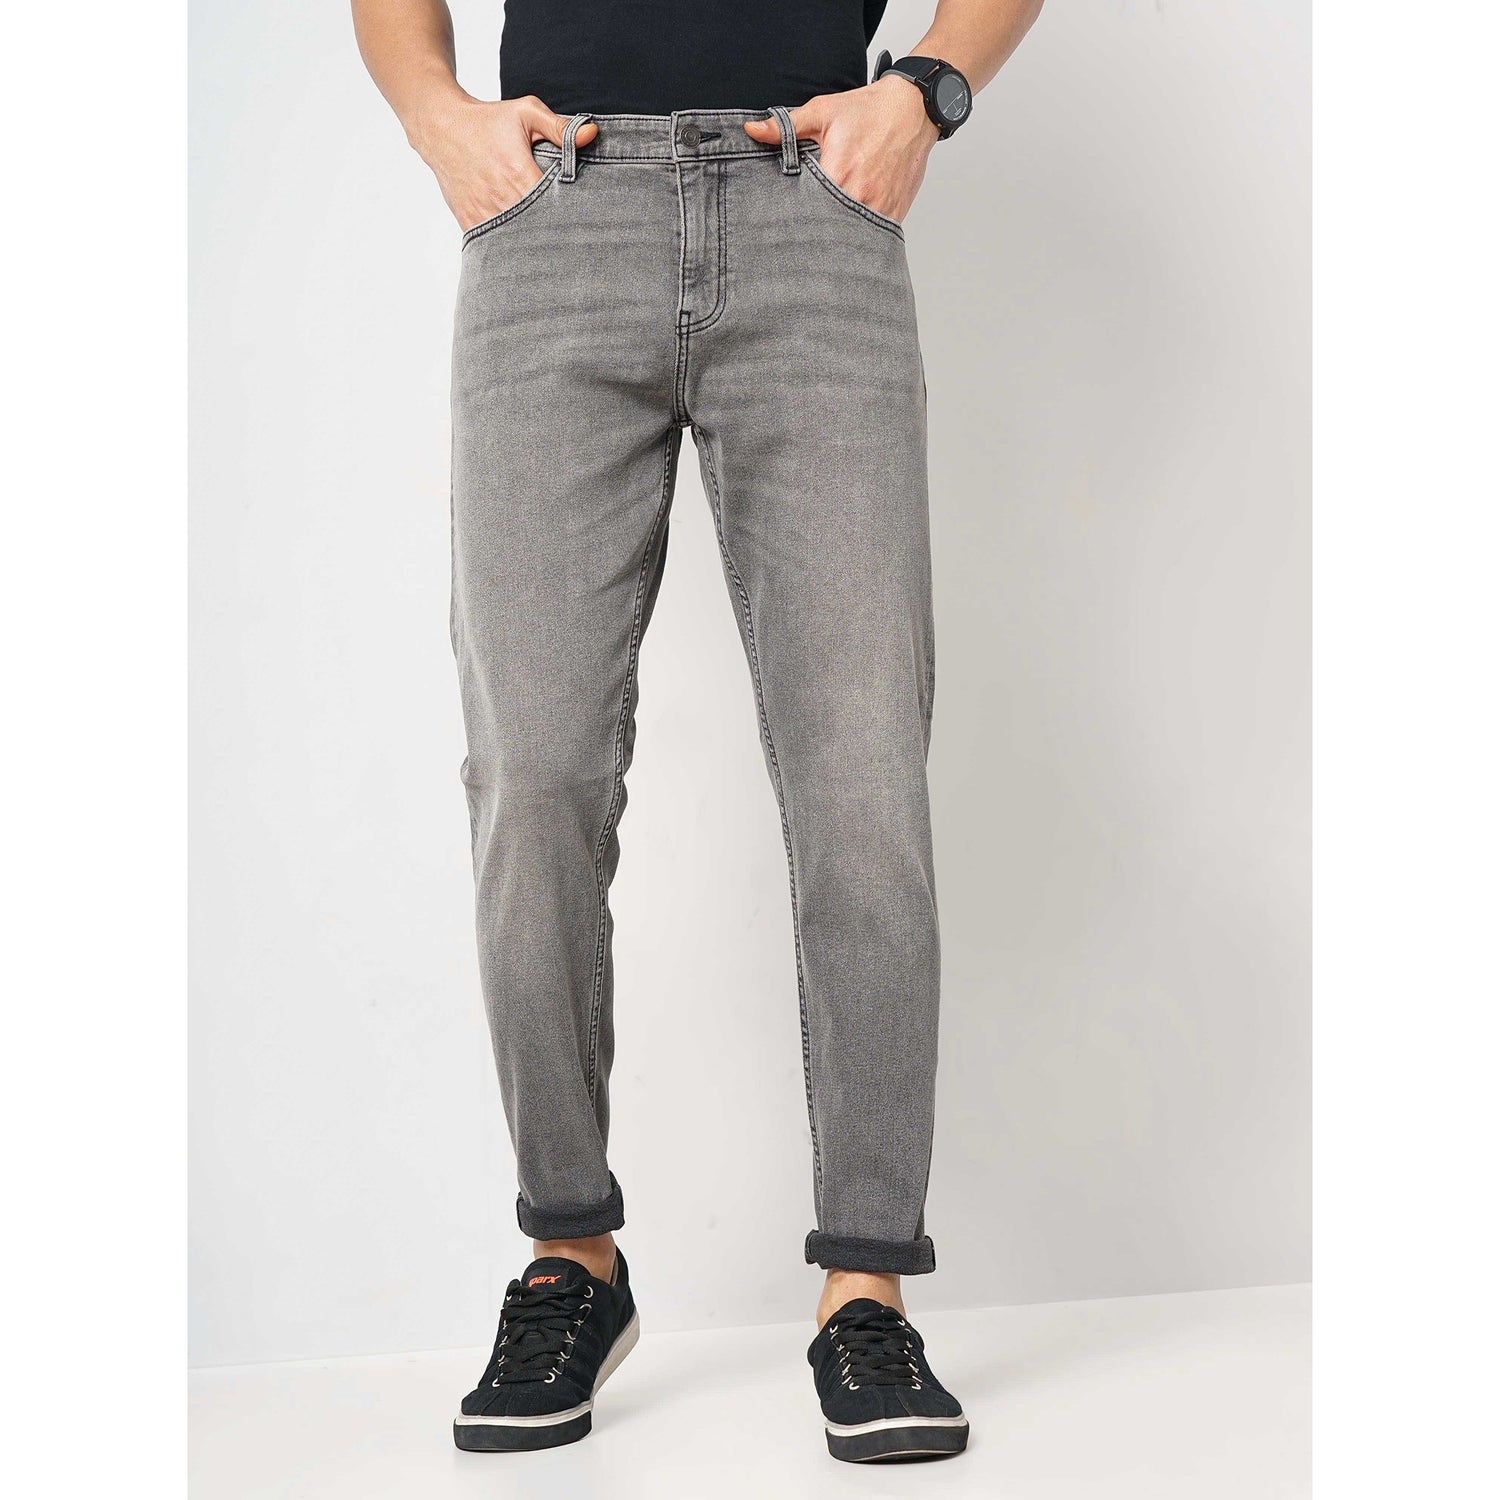 Men Grey Solid Skinny Fit Cotton Twill Denim Jeans (FOSKINNY01)